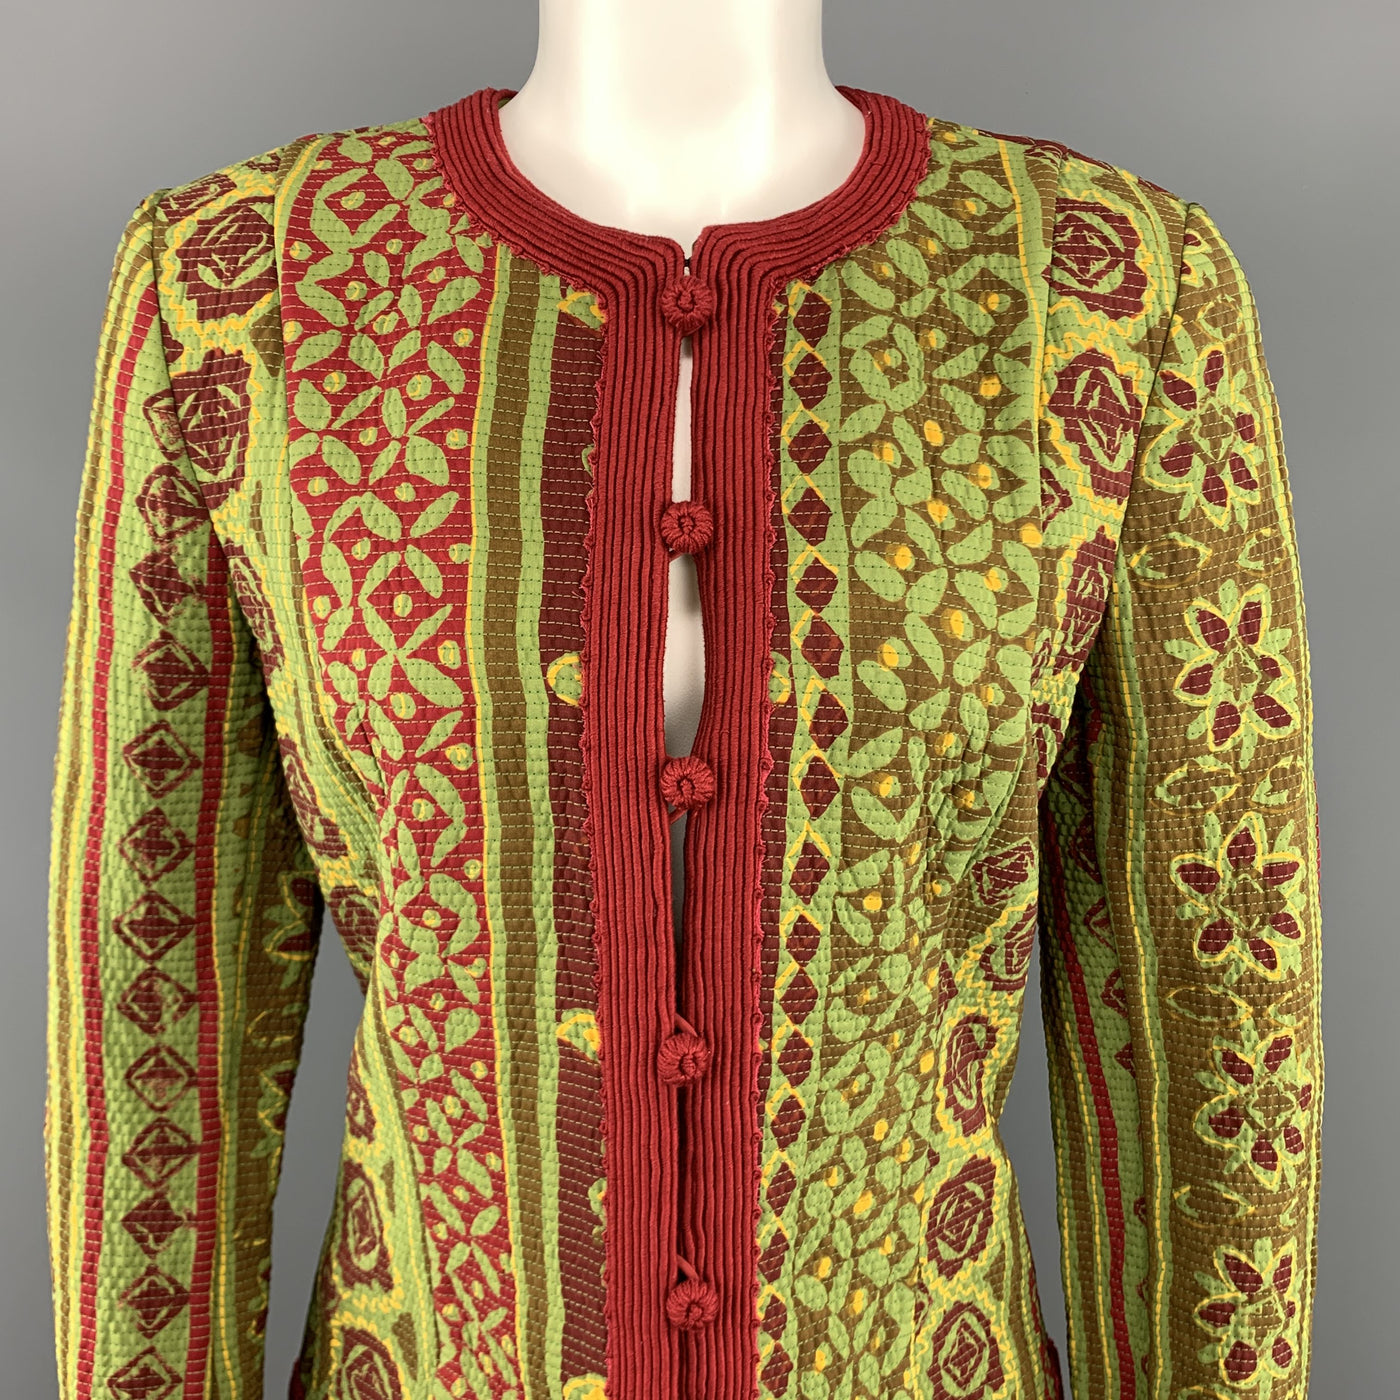 OSCAR DE LA RENTA Size 8 Green & Red Floral Collarless Jacket